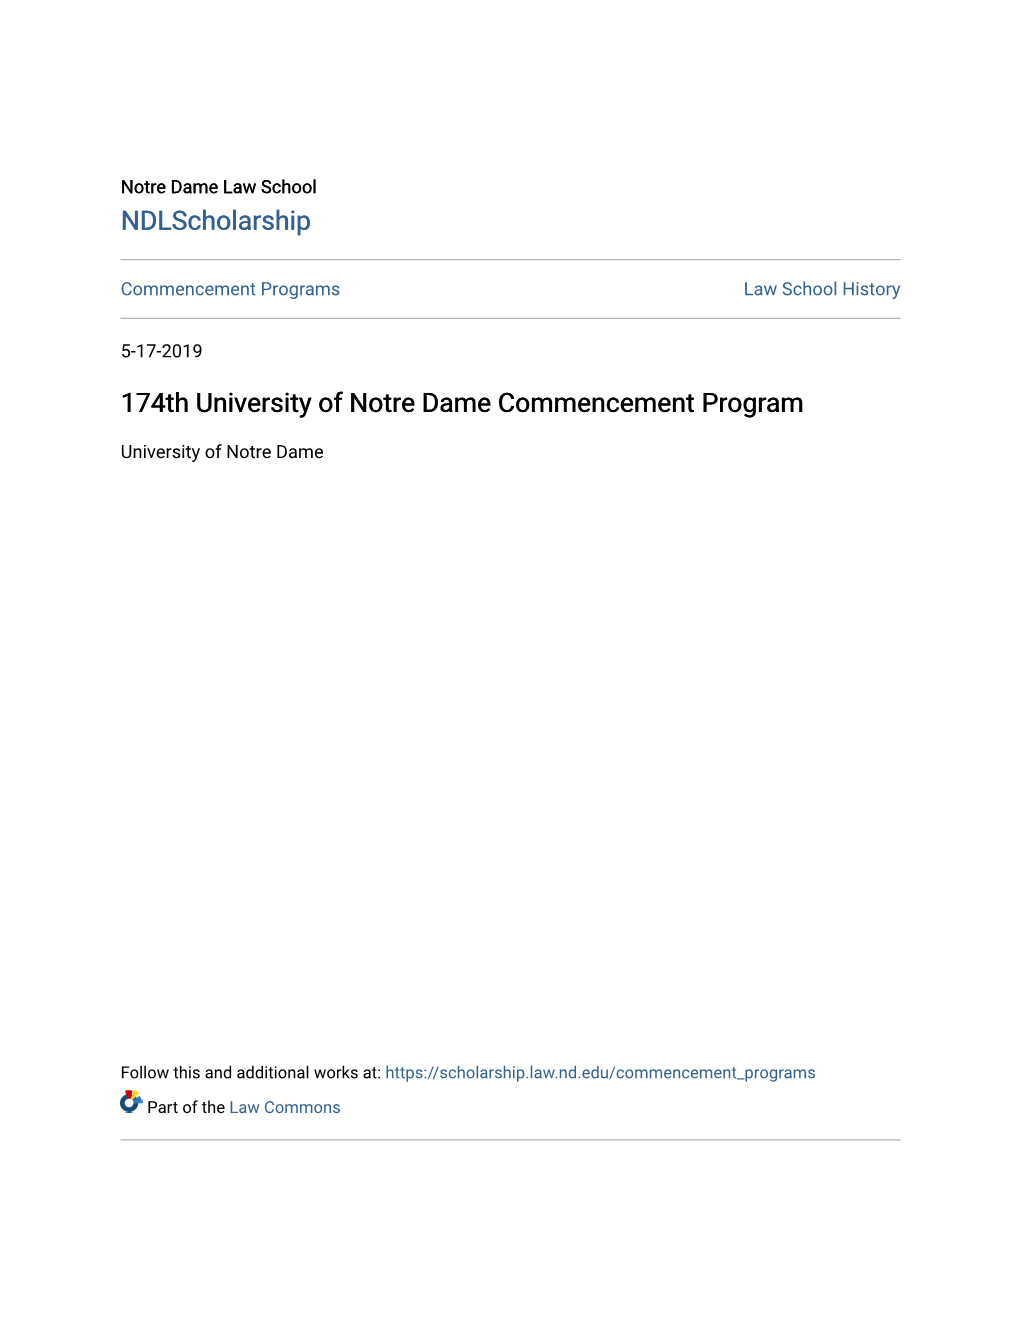 174Th University of Notre Dame Commencement Program